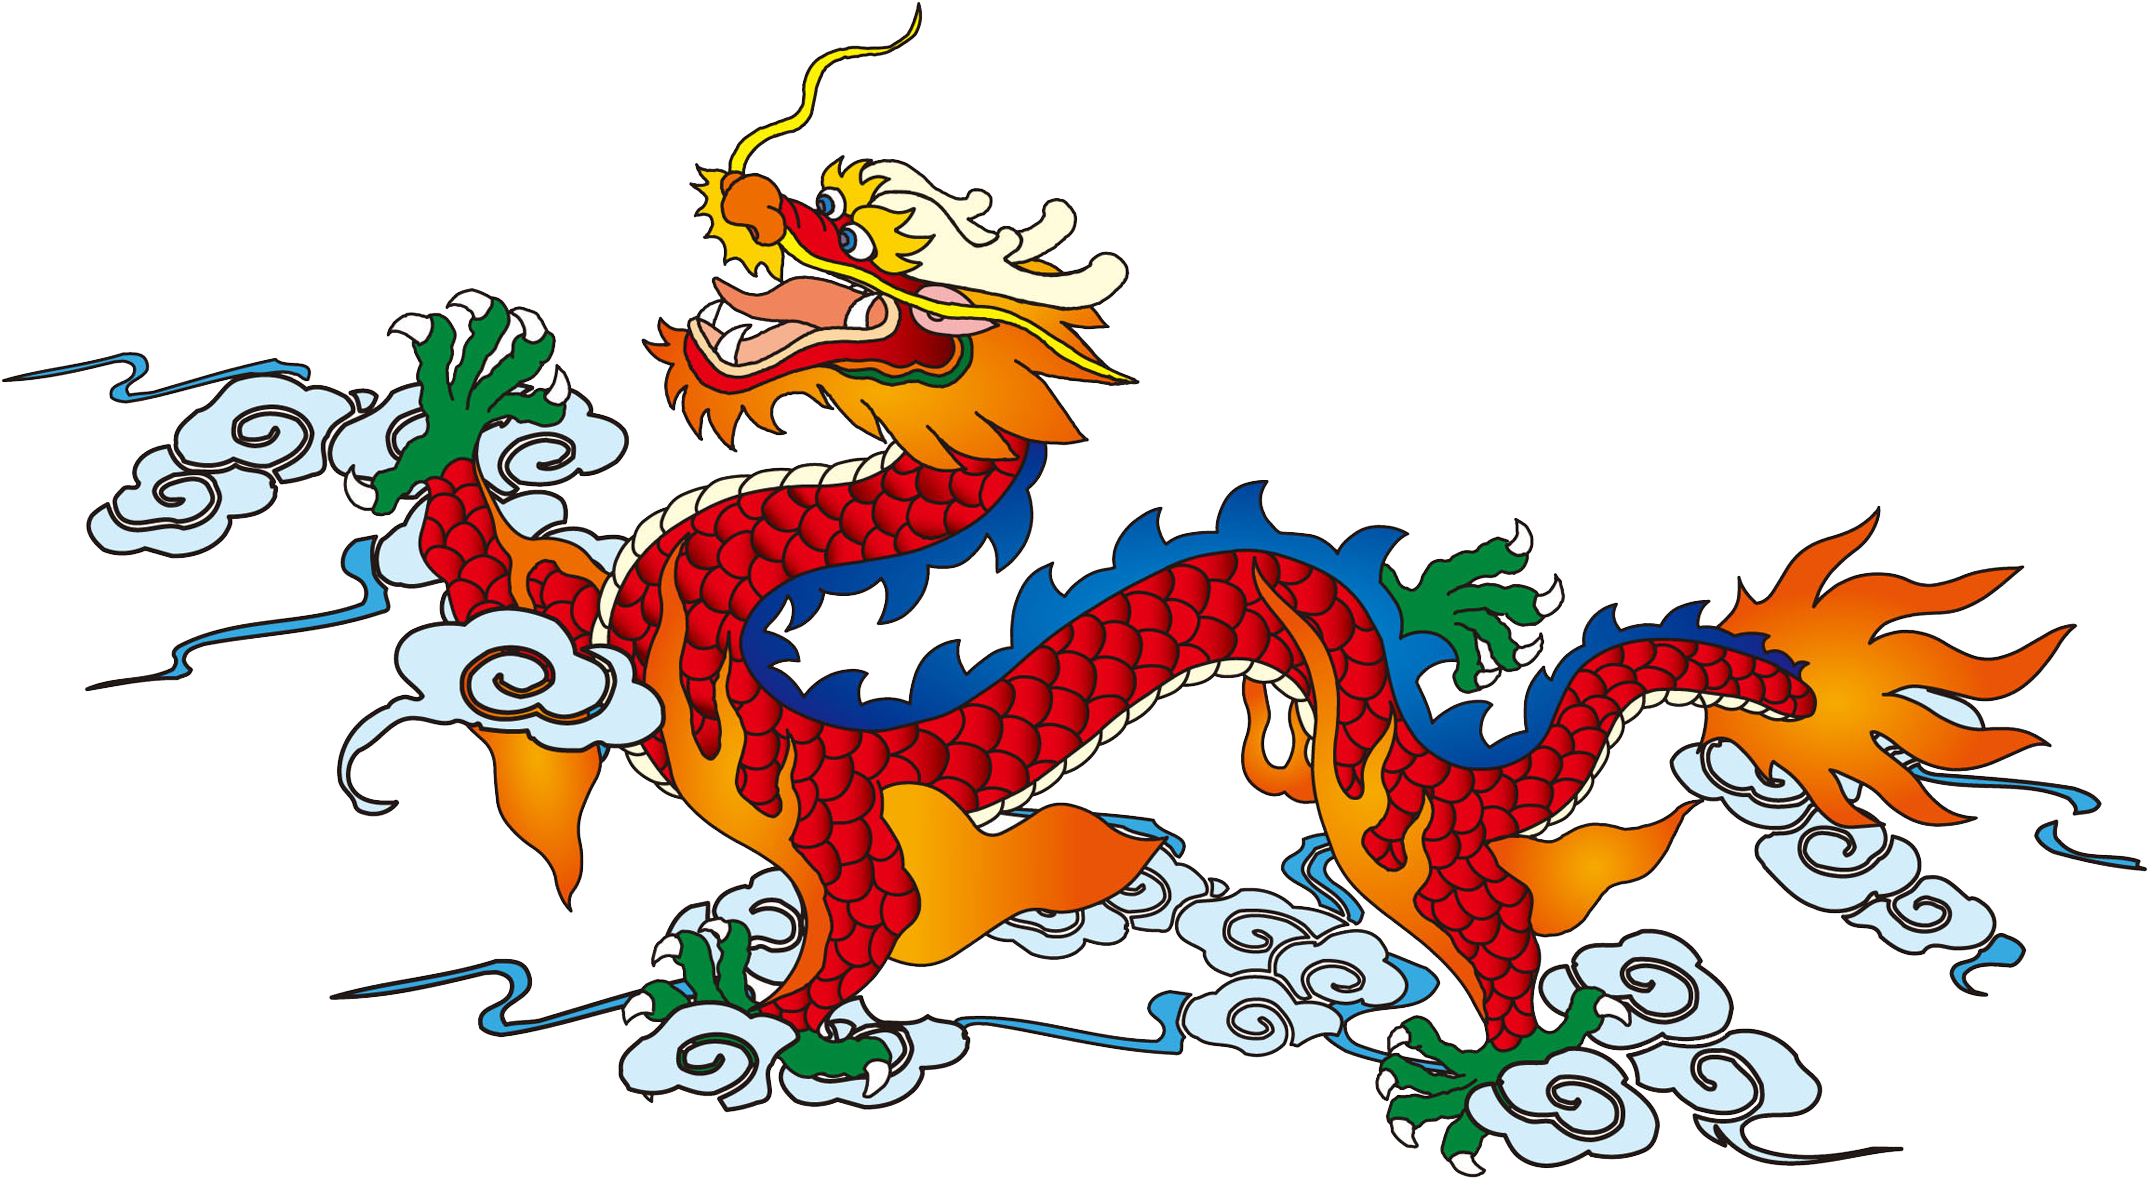 Картинка дракончик 2024 на прозрачном фоне. Чжулун дракон. Чжунлун китайский дракон. Китайский дракон символ Китая. Китайский дракон вид сбоку.